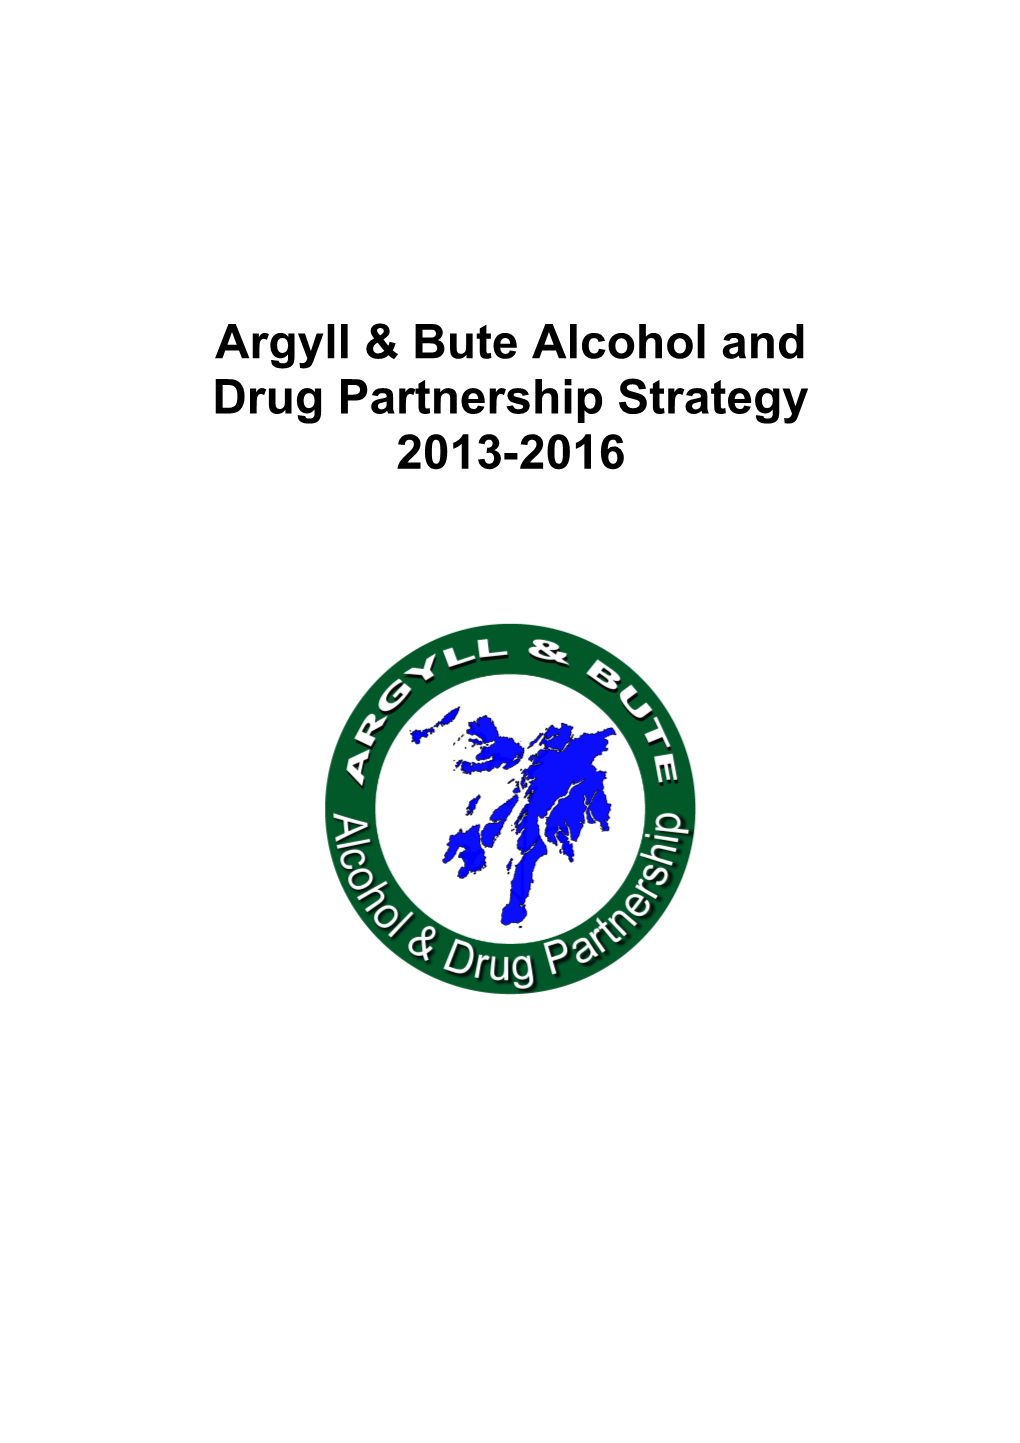 Argyll & Bute ADP Strategy 2013-21016